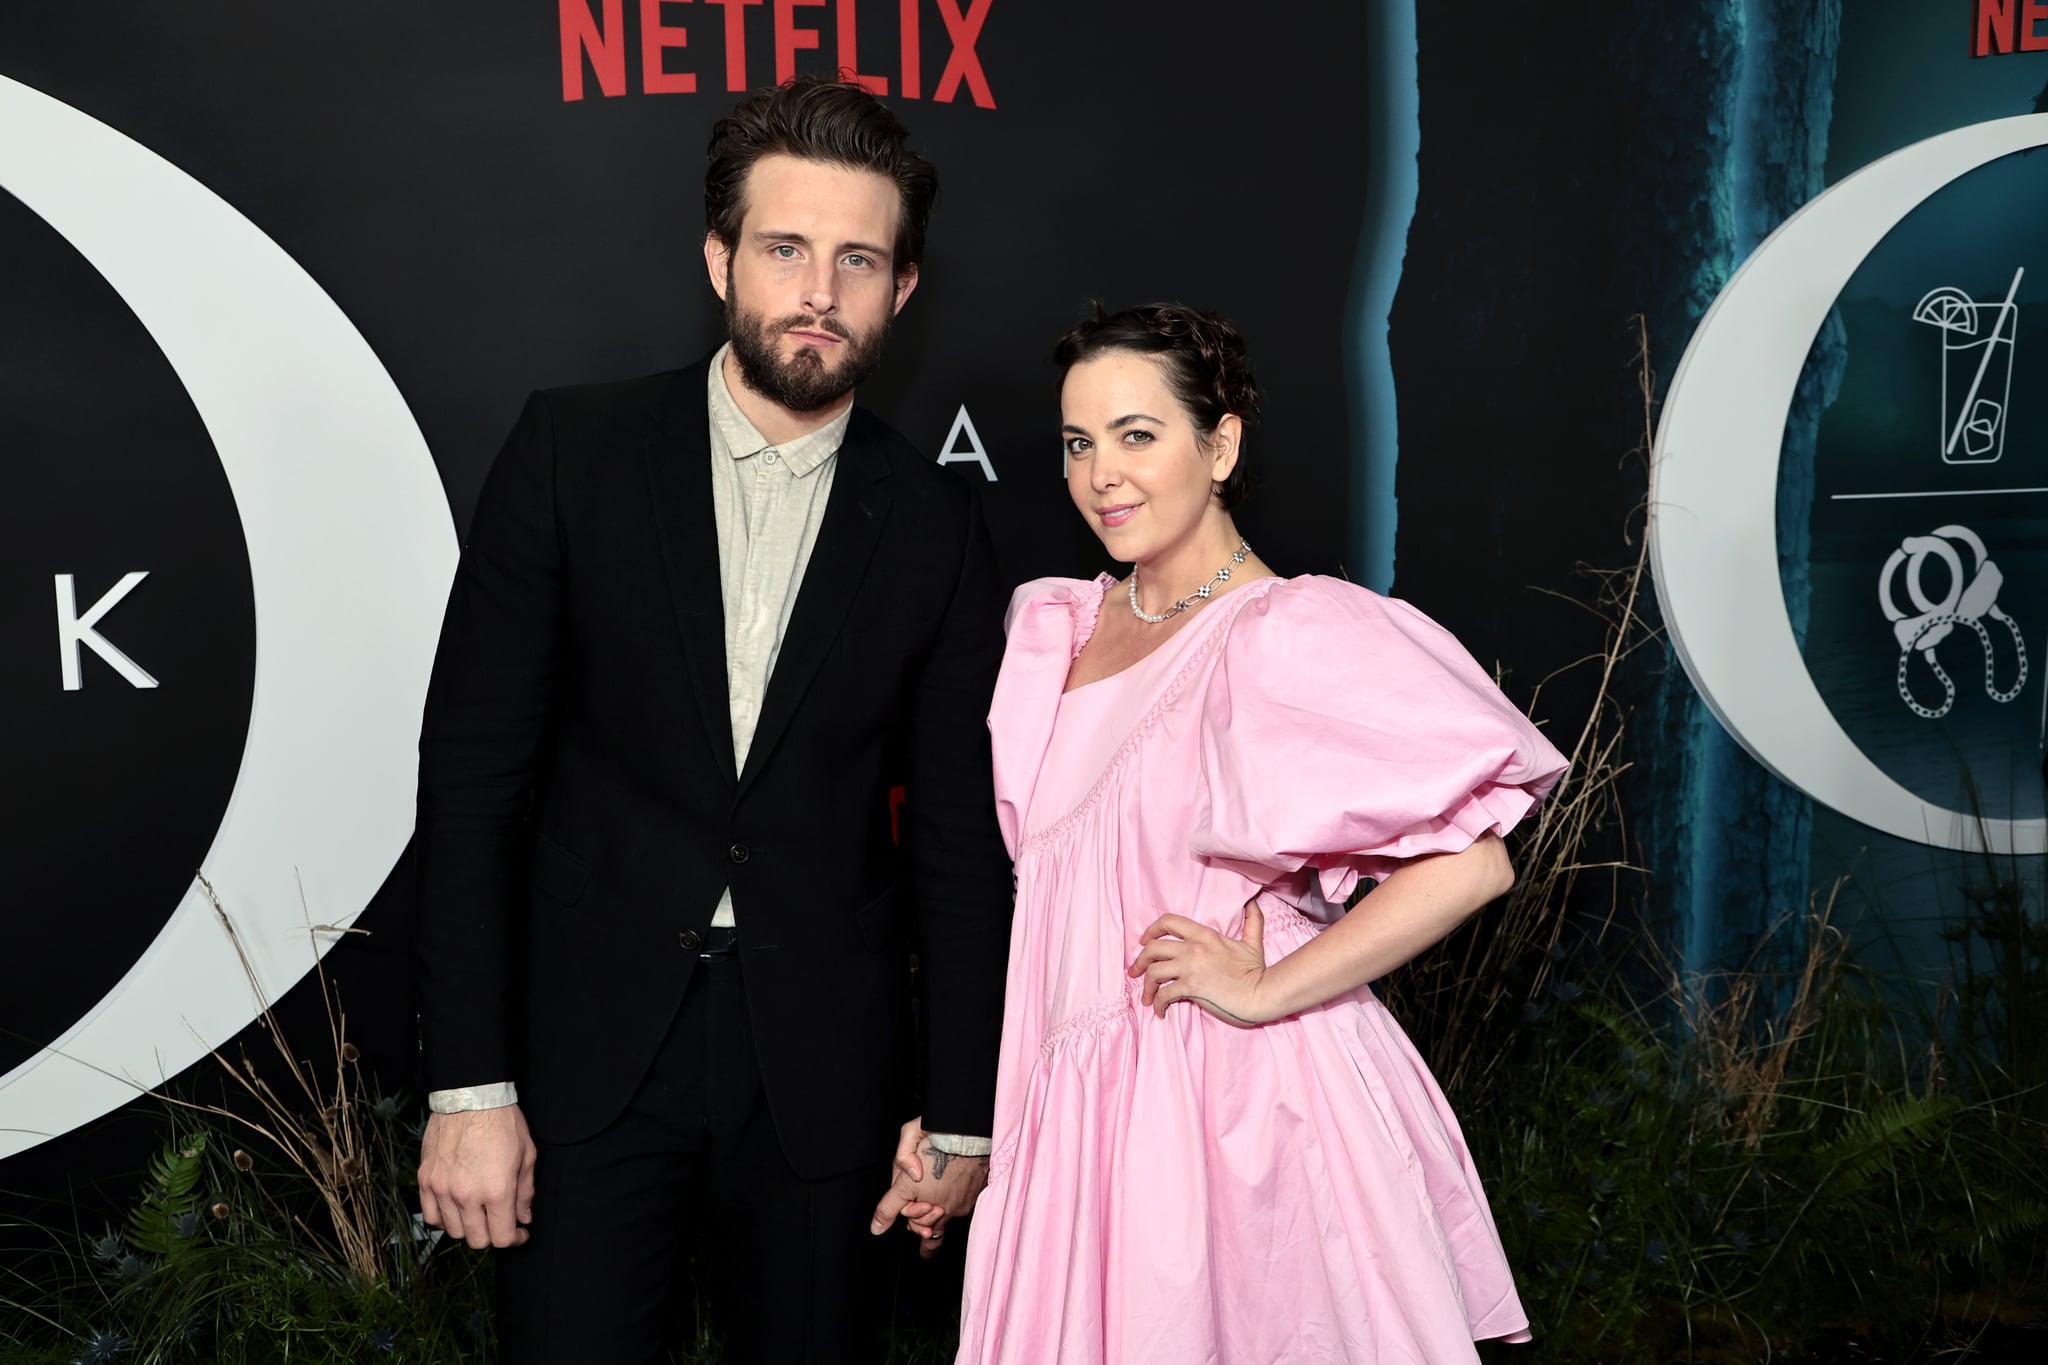 NEW YORK, NEW YORK - APRIL 21: Nico Tortorella and Bethany C. Meyers attend Netflix's 